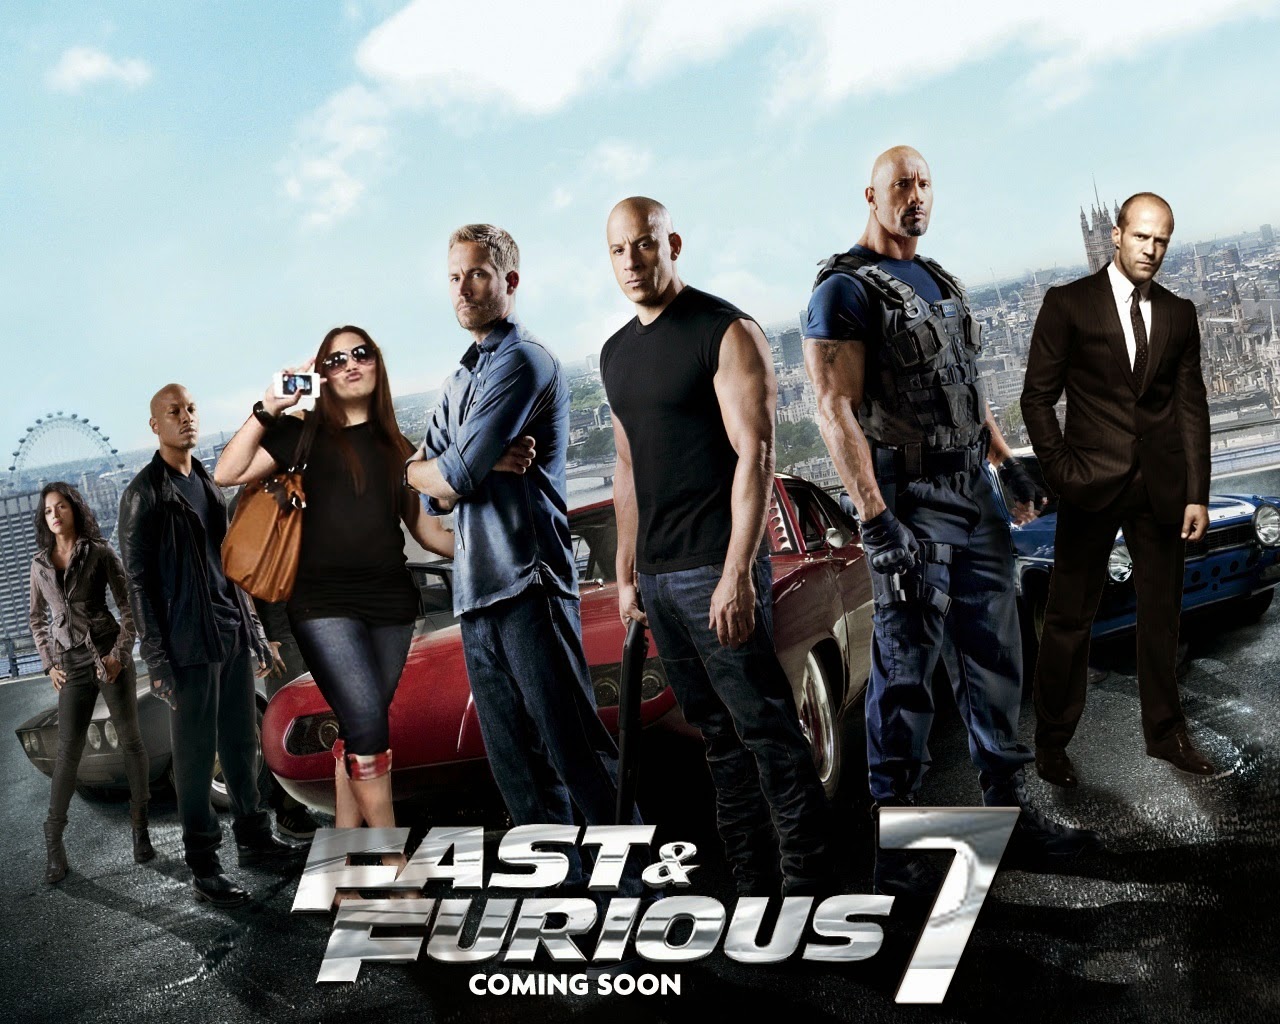 Fast Amp; Furious 7 (English) 2 Movie Download In Telugu Hd Moviesl